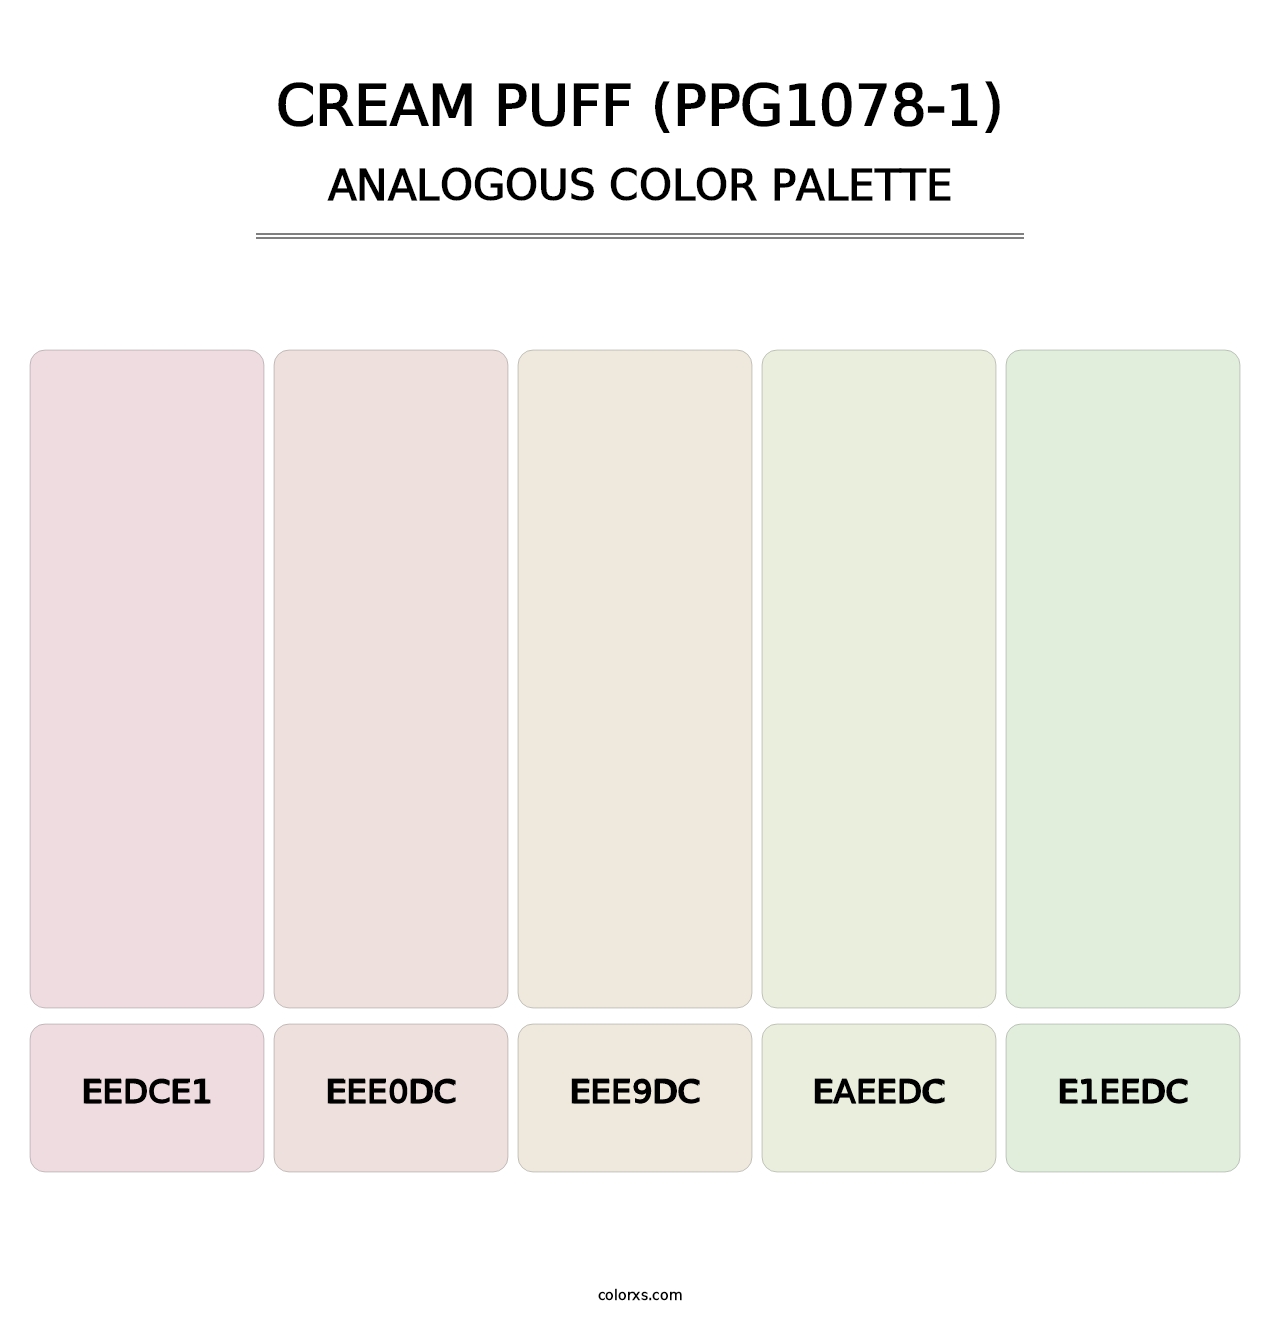 Cream Puff (PPG1078-1) - Analogous Color Palette